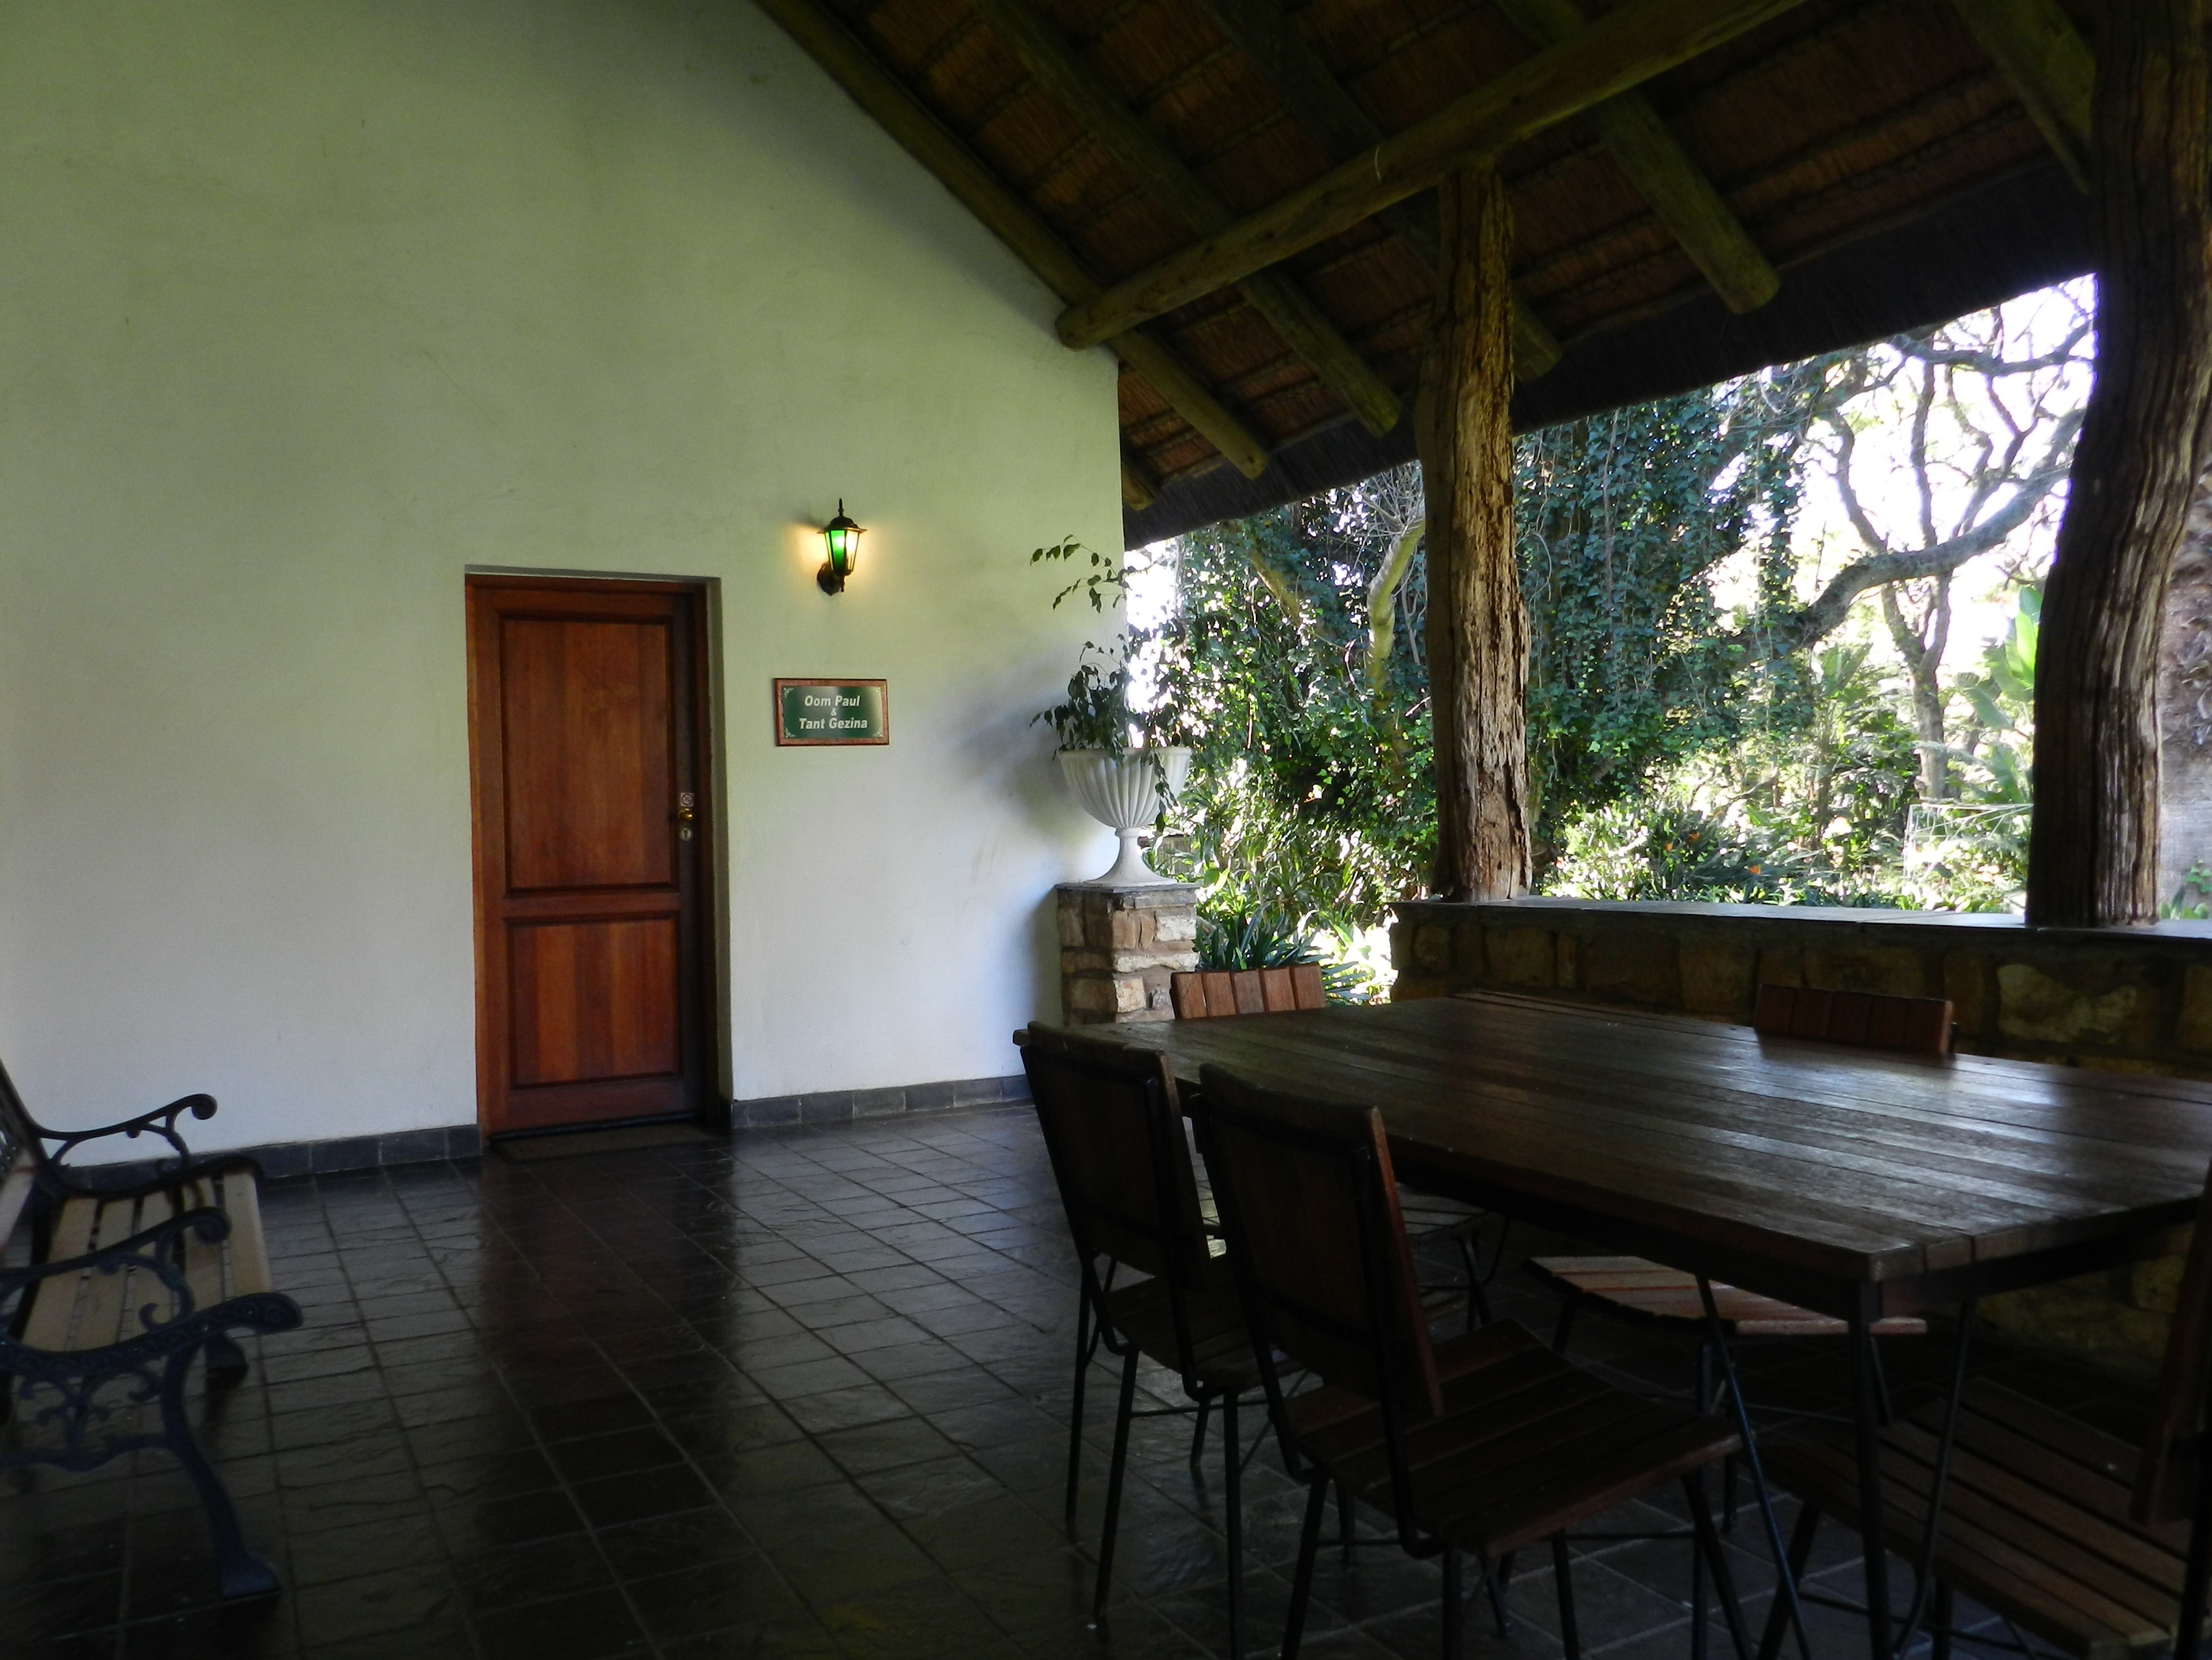 Bridal suite, Oom Paul & Tant Gezina, entrance view from veranda at the President Paul Kruger Guest Lodge, Rustenburg